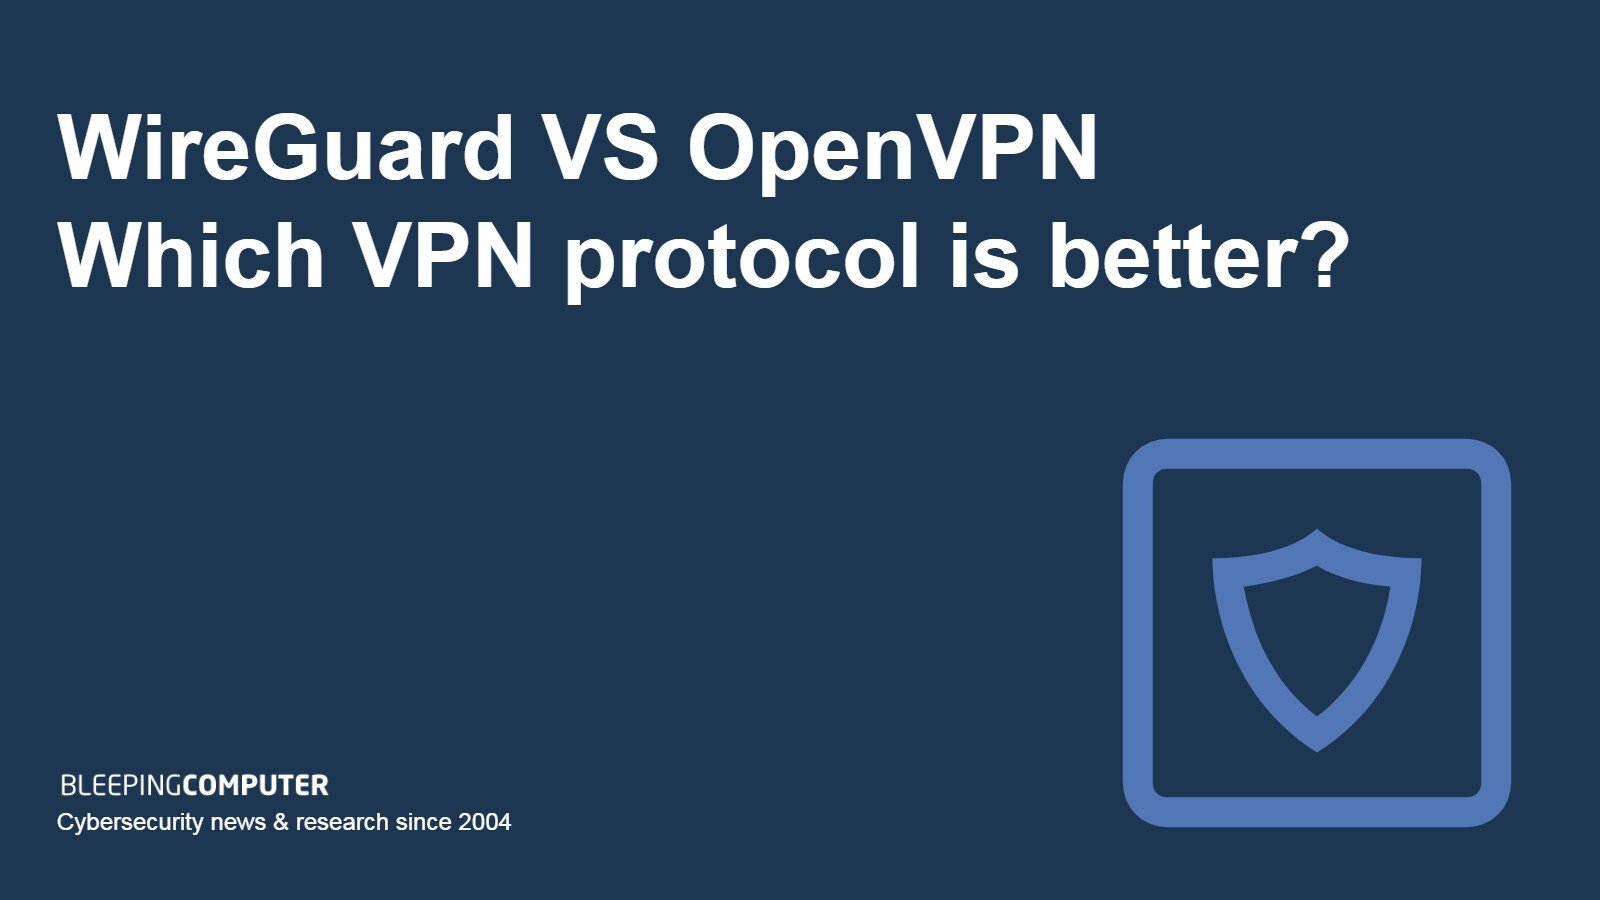 Is WireGuard better than OpenVPN? WireGuard%20VS%20OpenVPN%20 %20Which%20VPN%20protocol%20is%20better